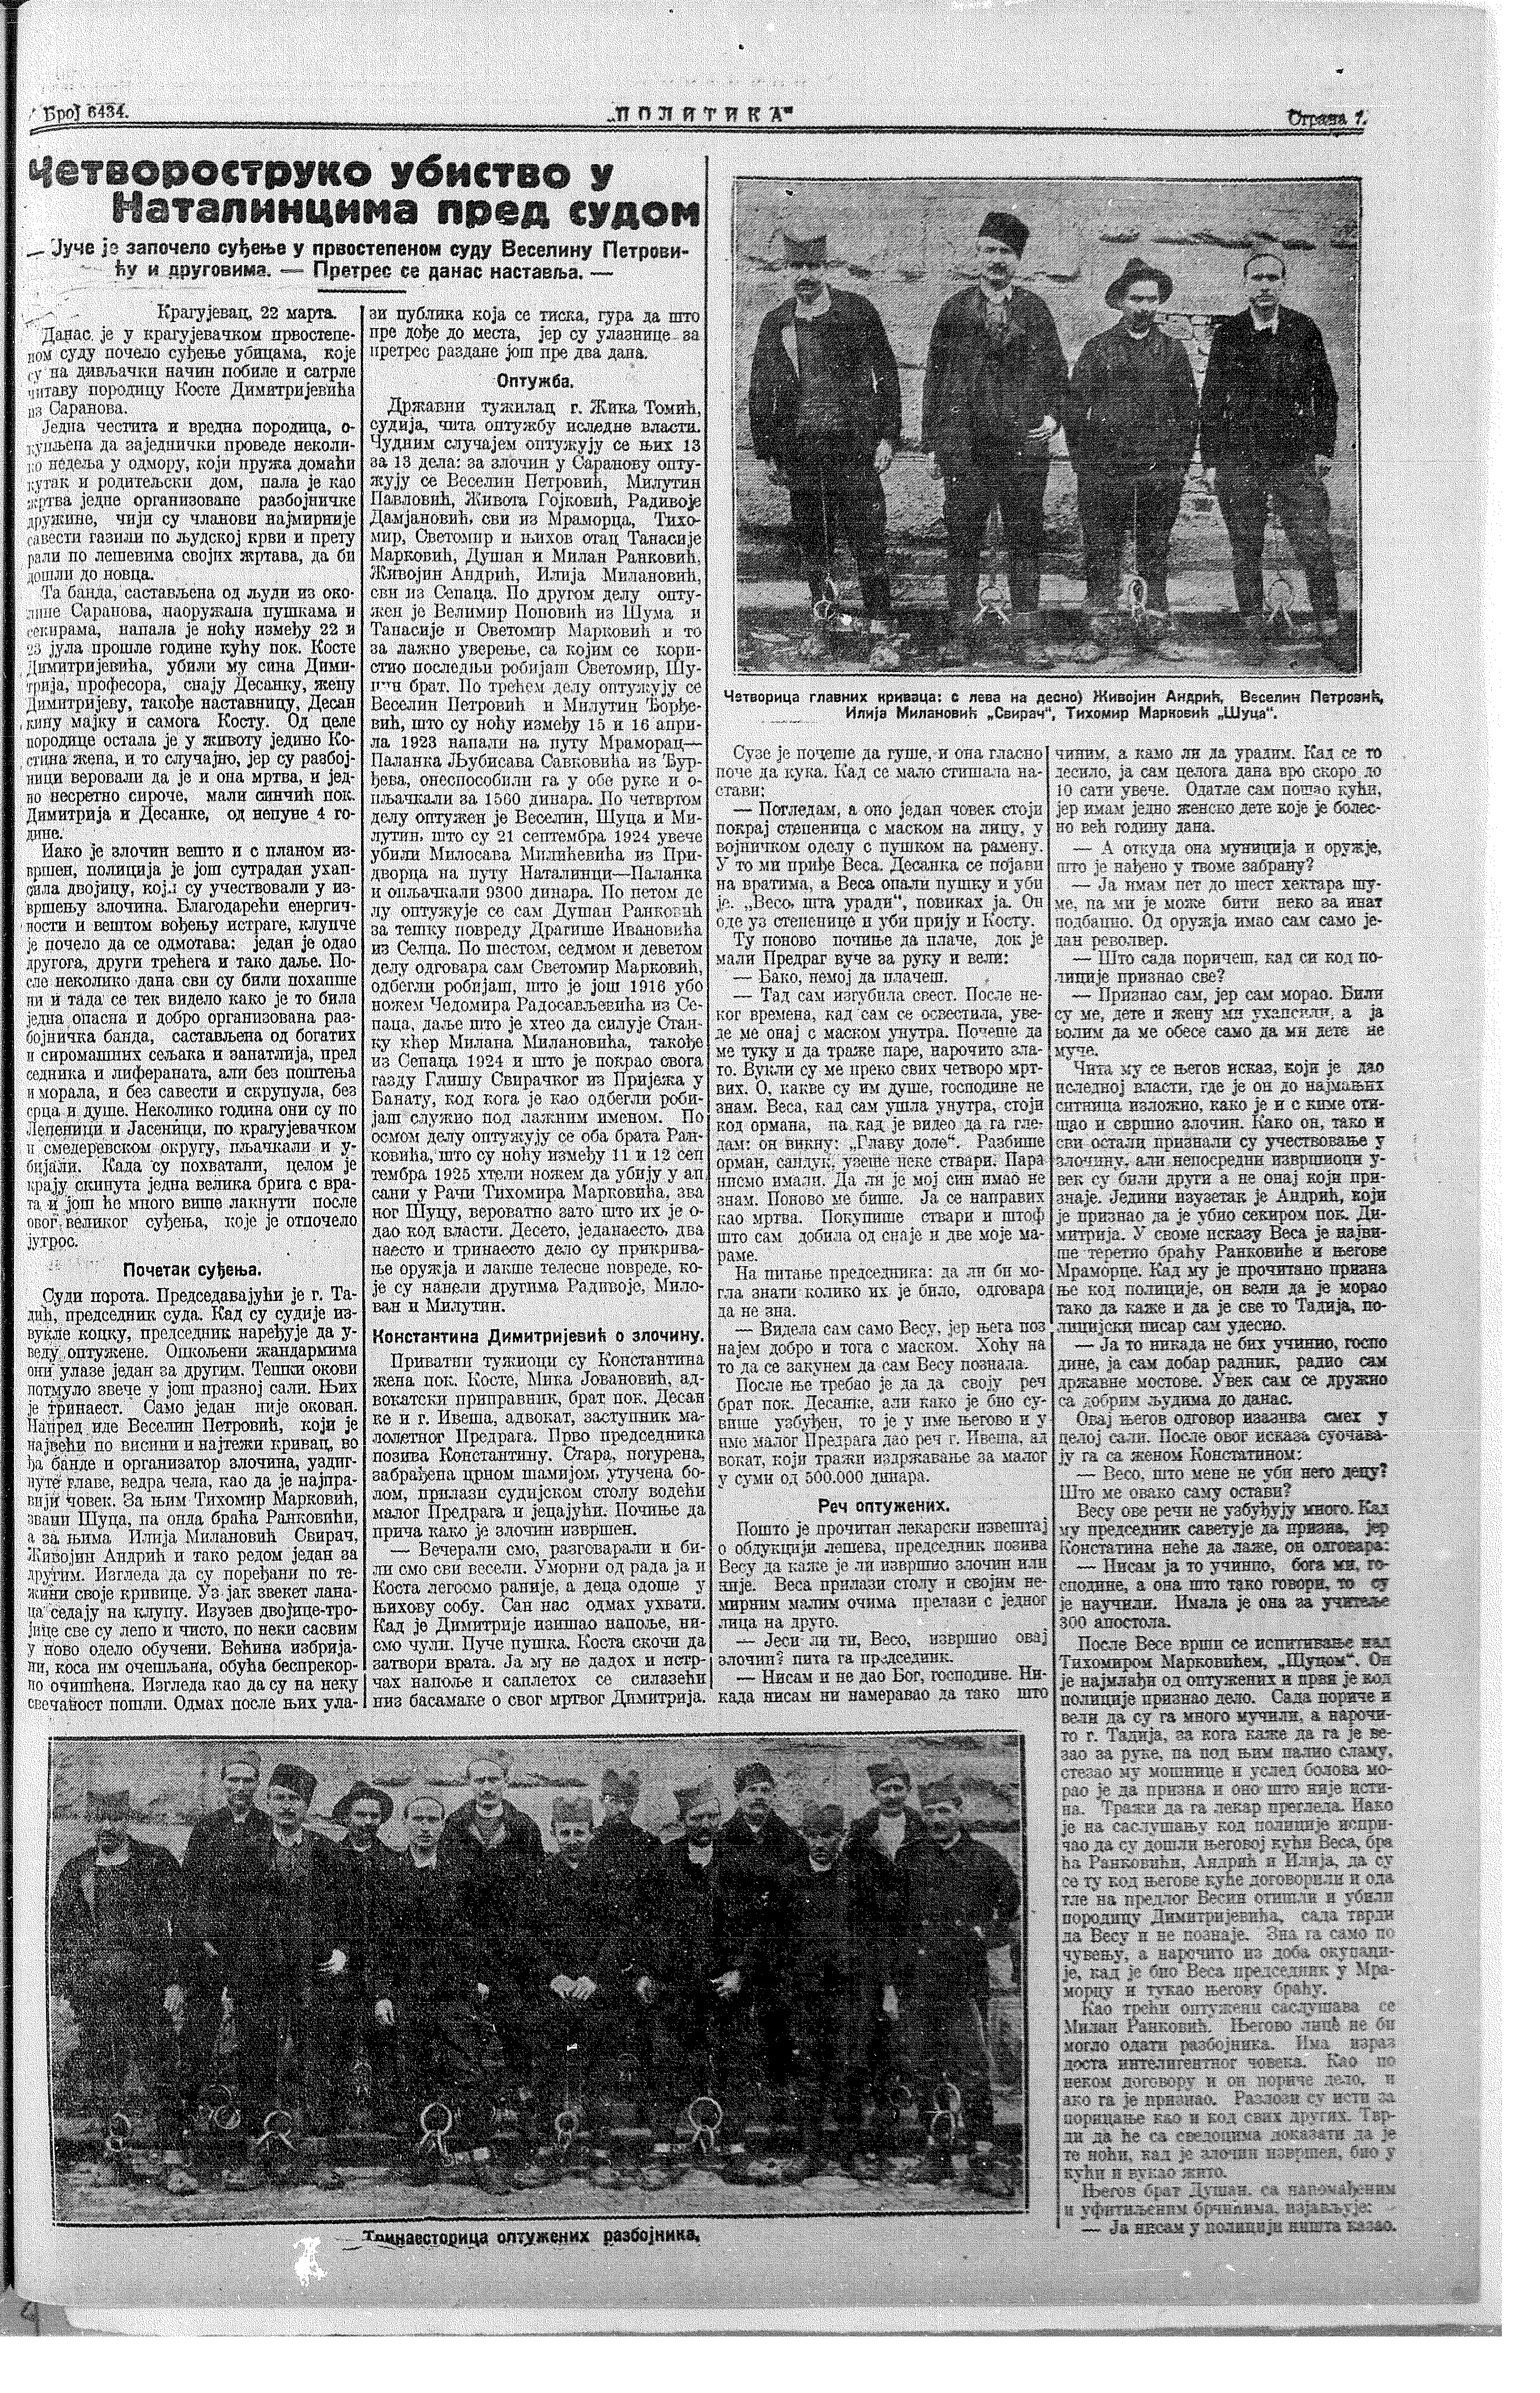 Četvorostruko ubistvo pred sudom, Politika, 23.03.1926